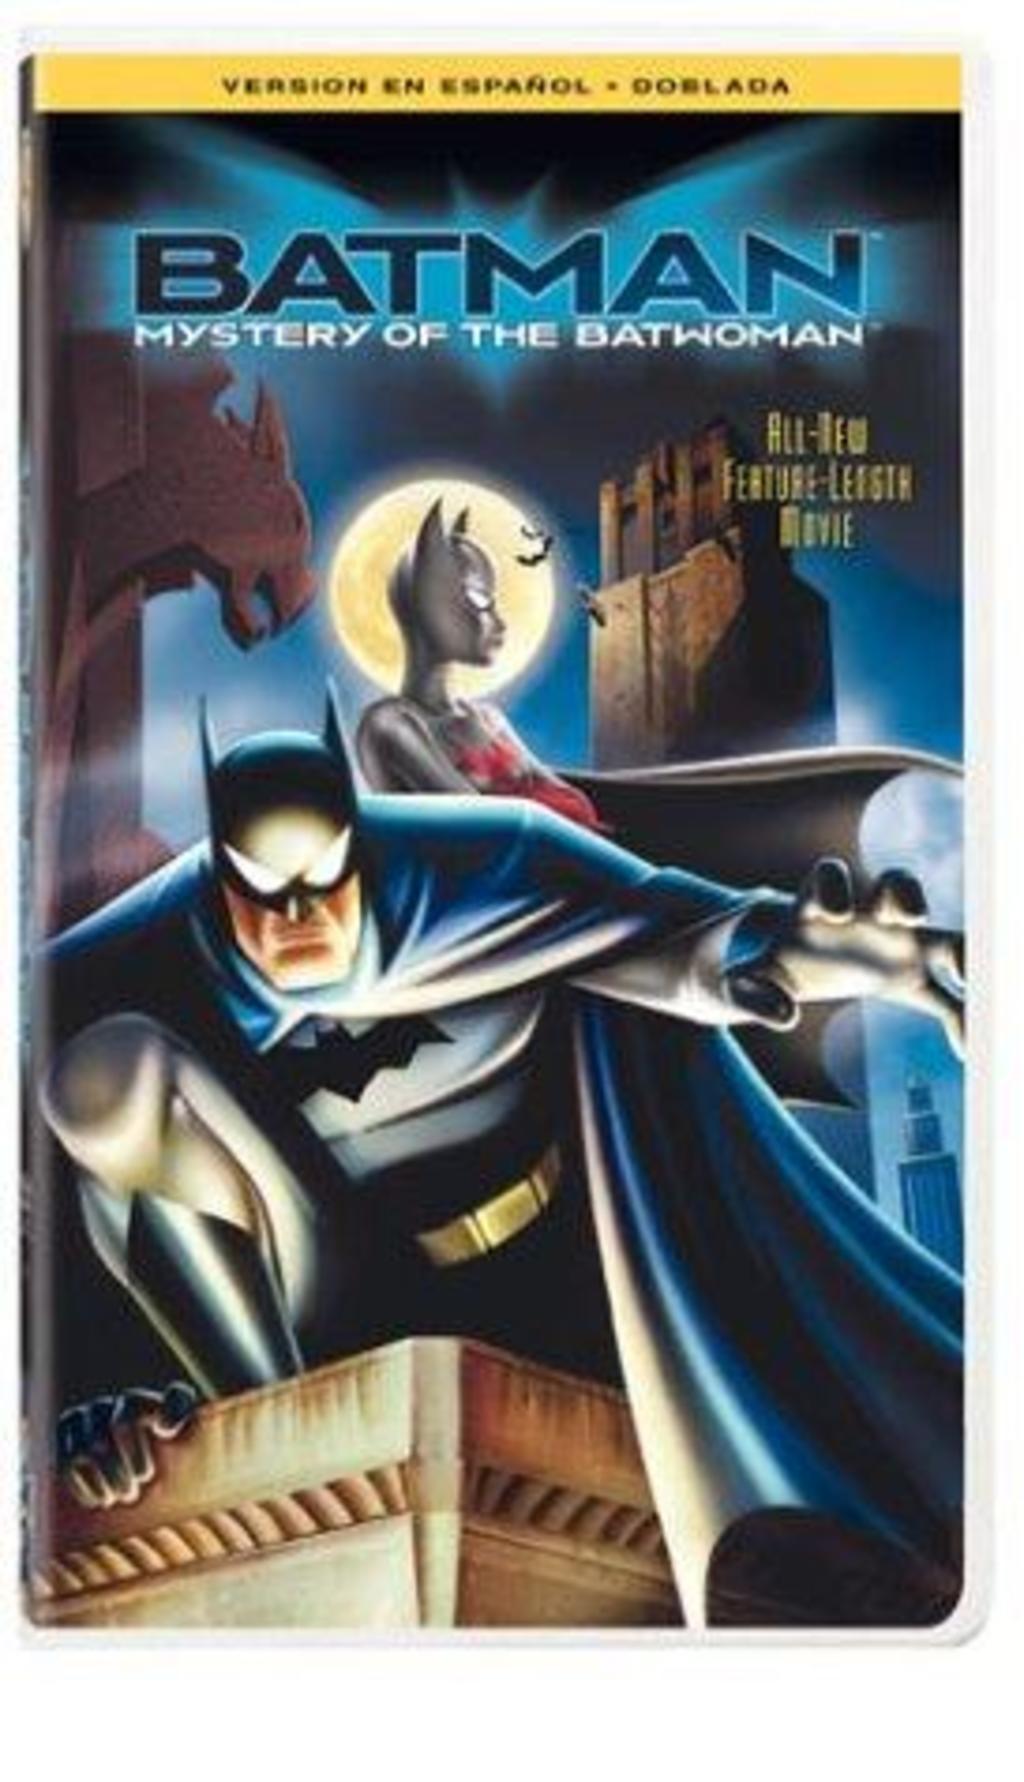 Watch Batman: Mystery of the Batwoman on Netflix Today ...